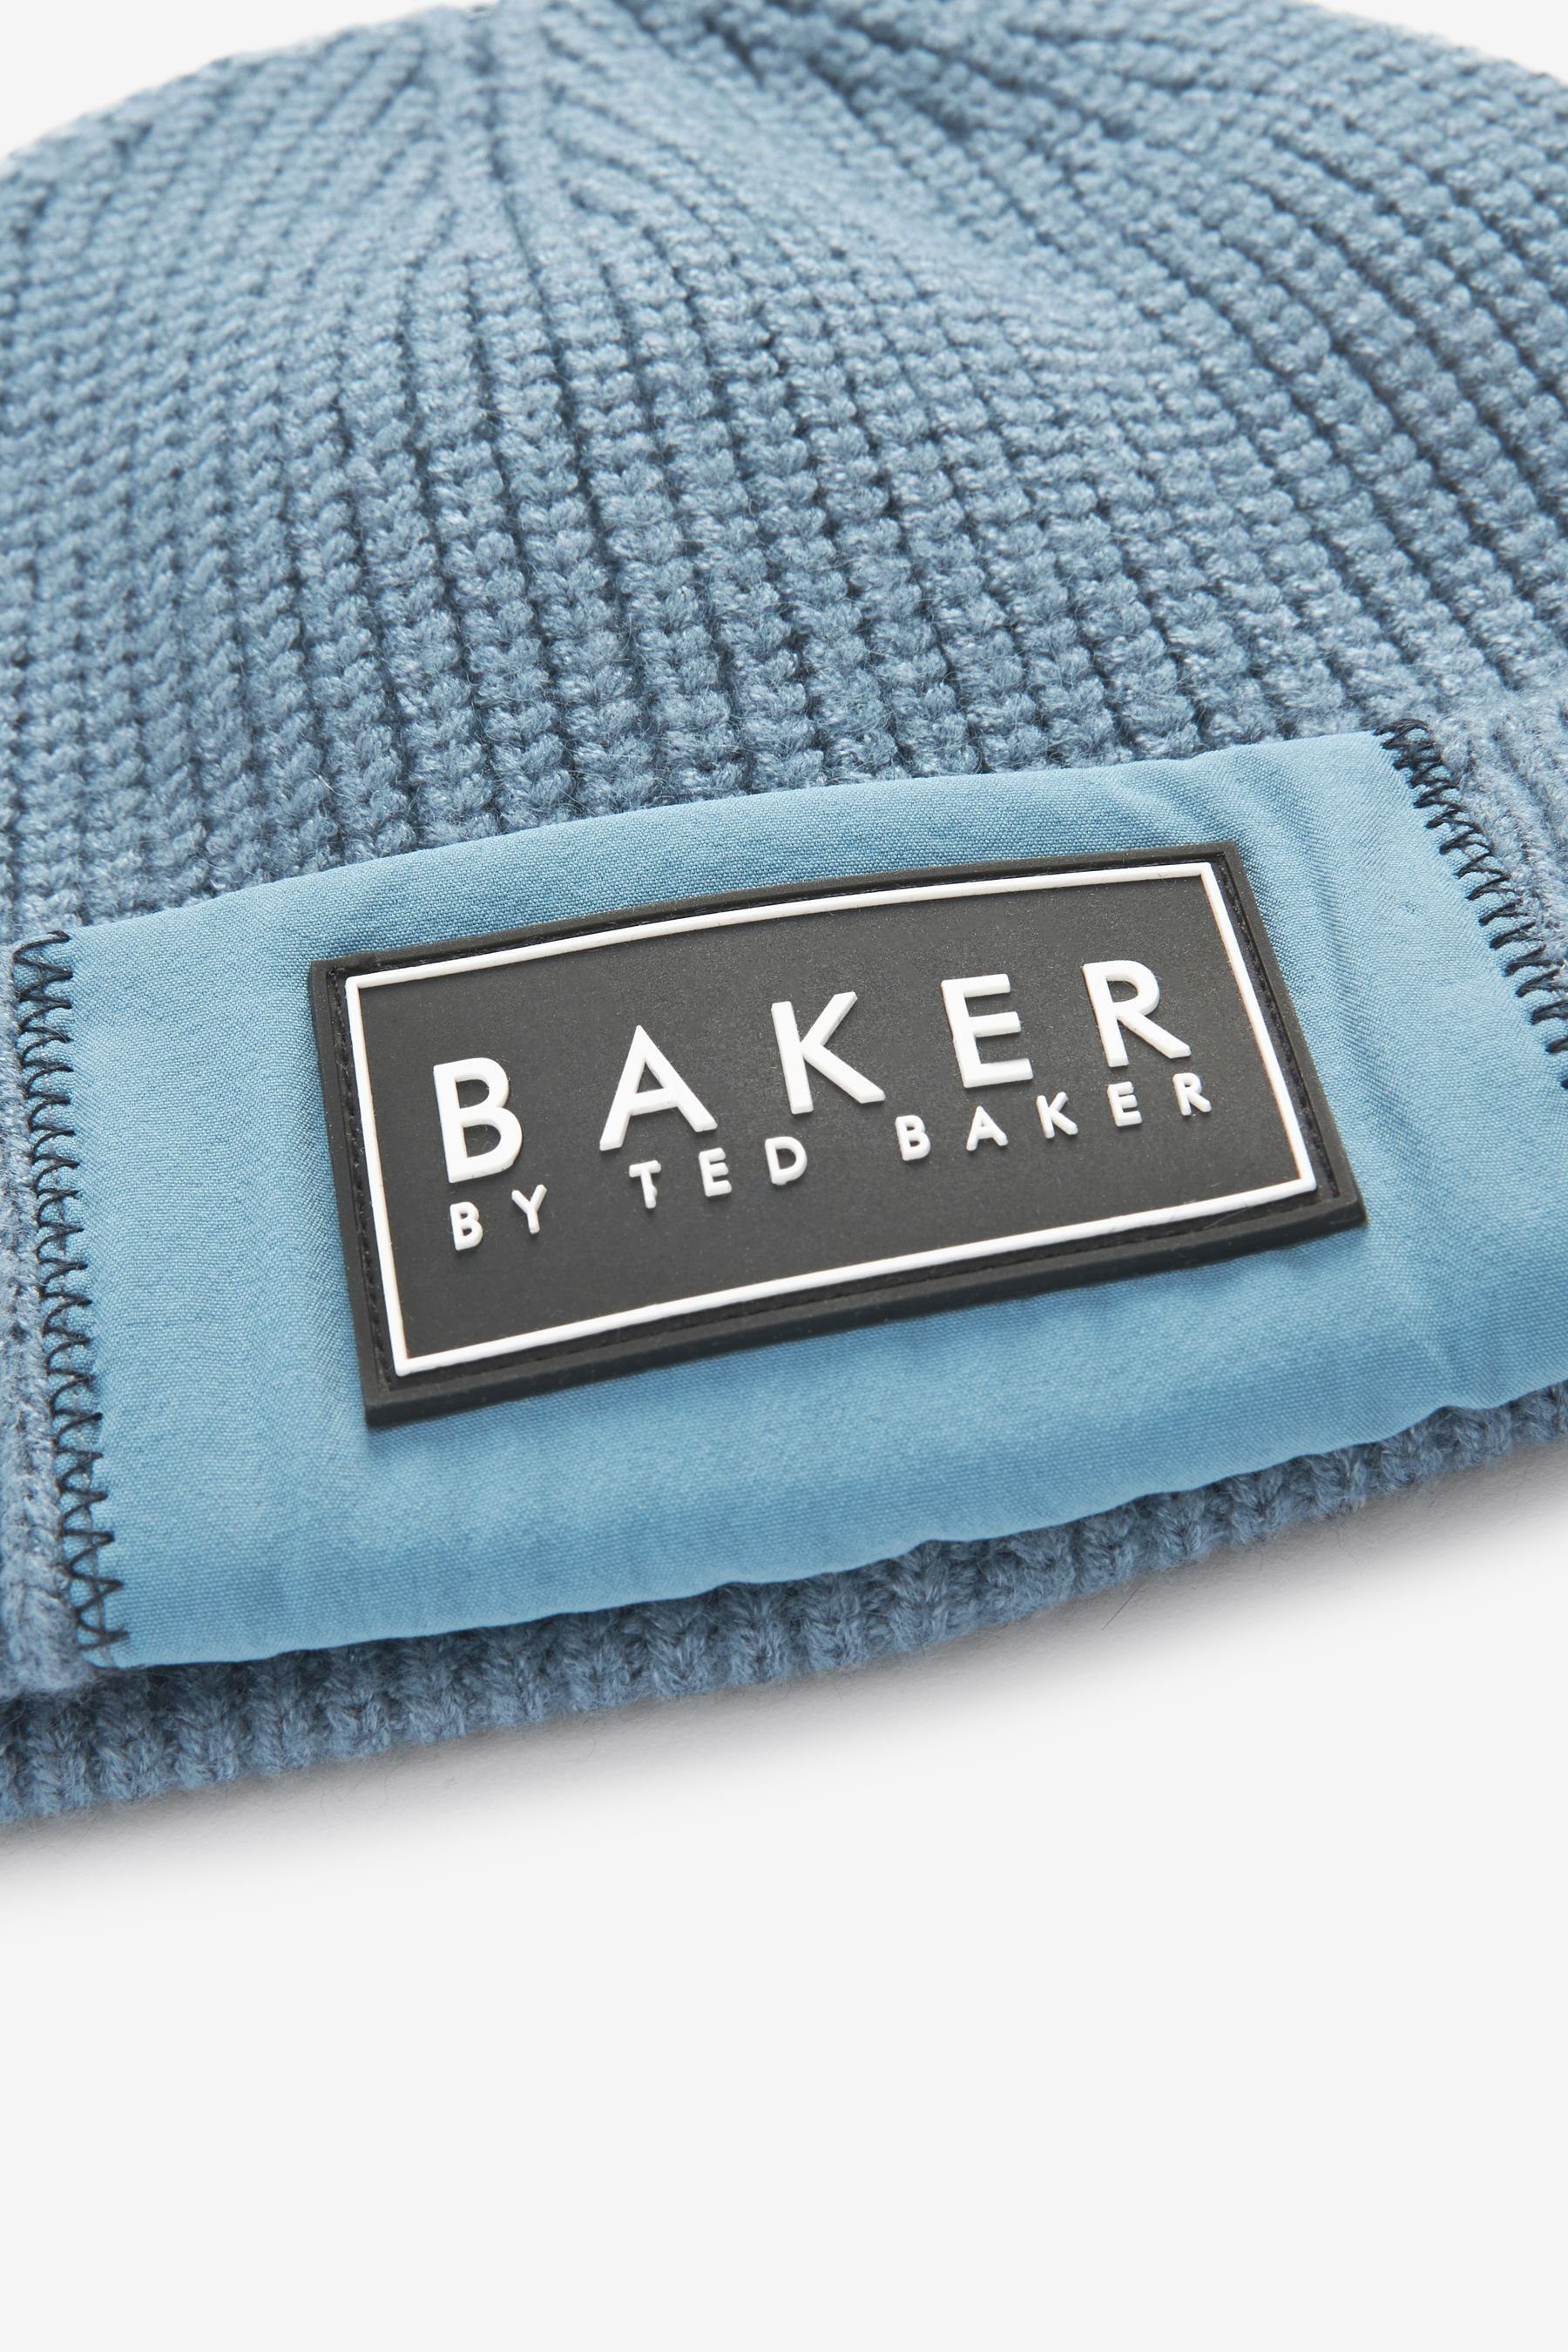 by Ted (2-St) Baker Handschuhen aus Set Blue Beanie Mütze Ted Baker und Baker by Baker